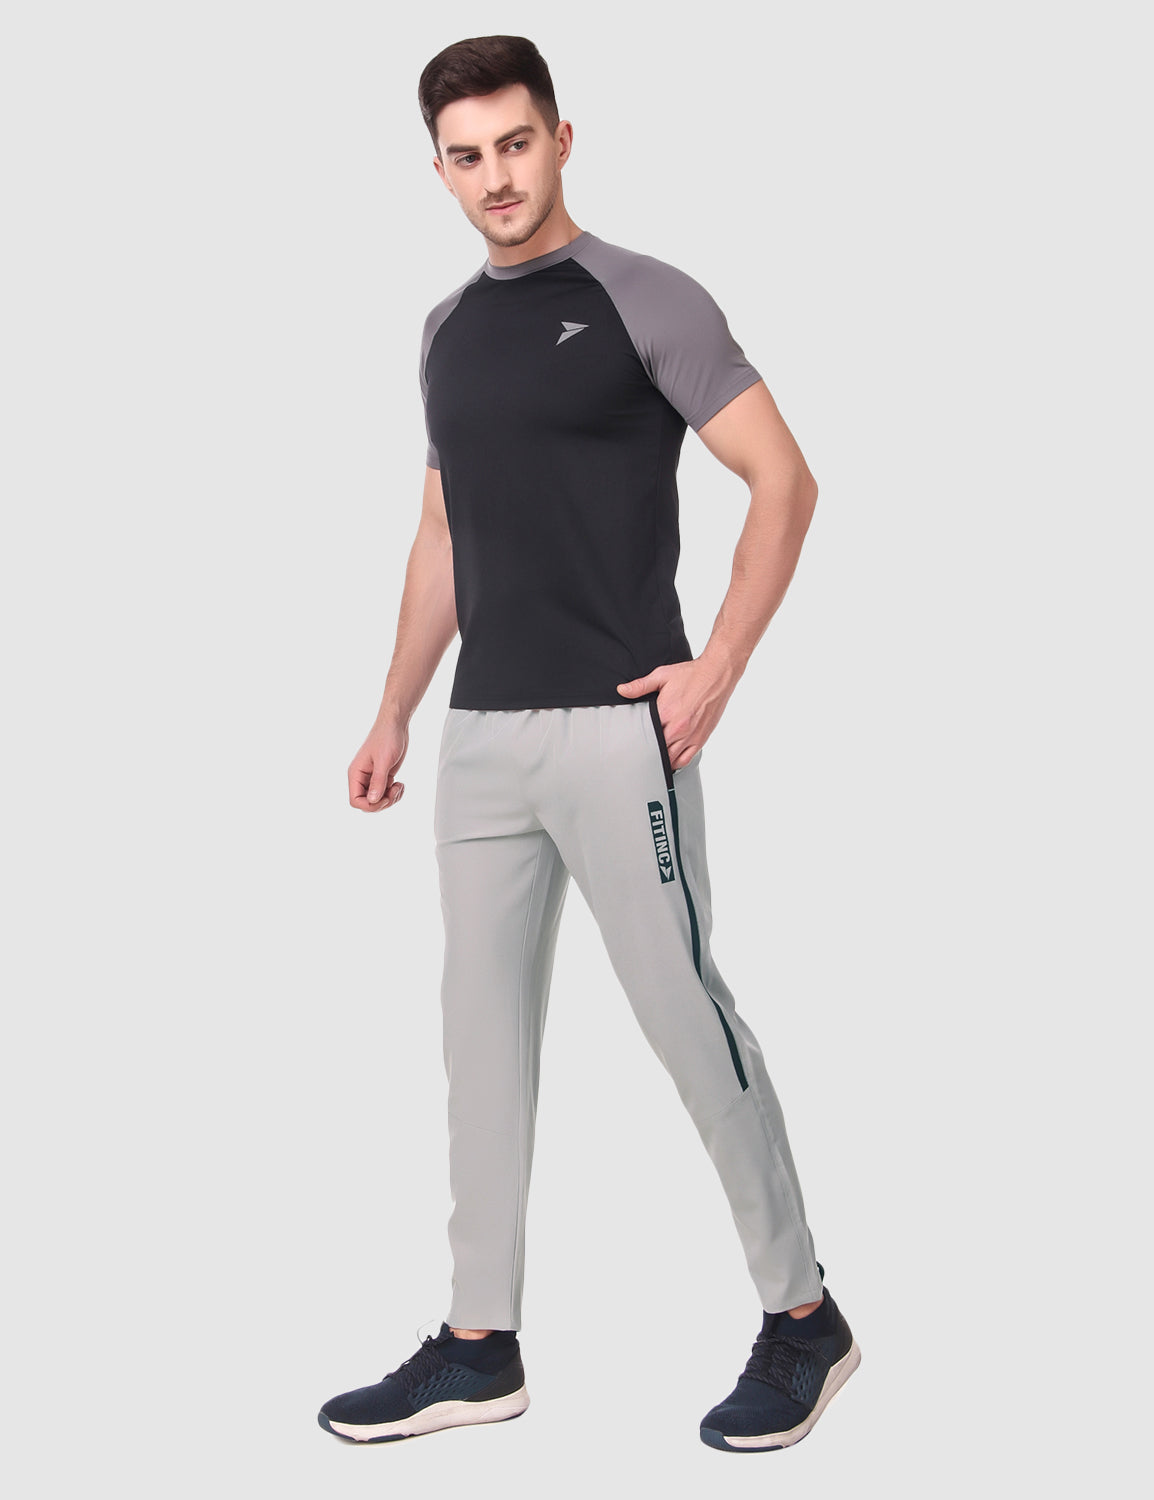 Fitinc NS Lycra Dryfit Light Grey Track Pants with Zipper Pockets – FITINC